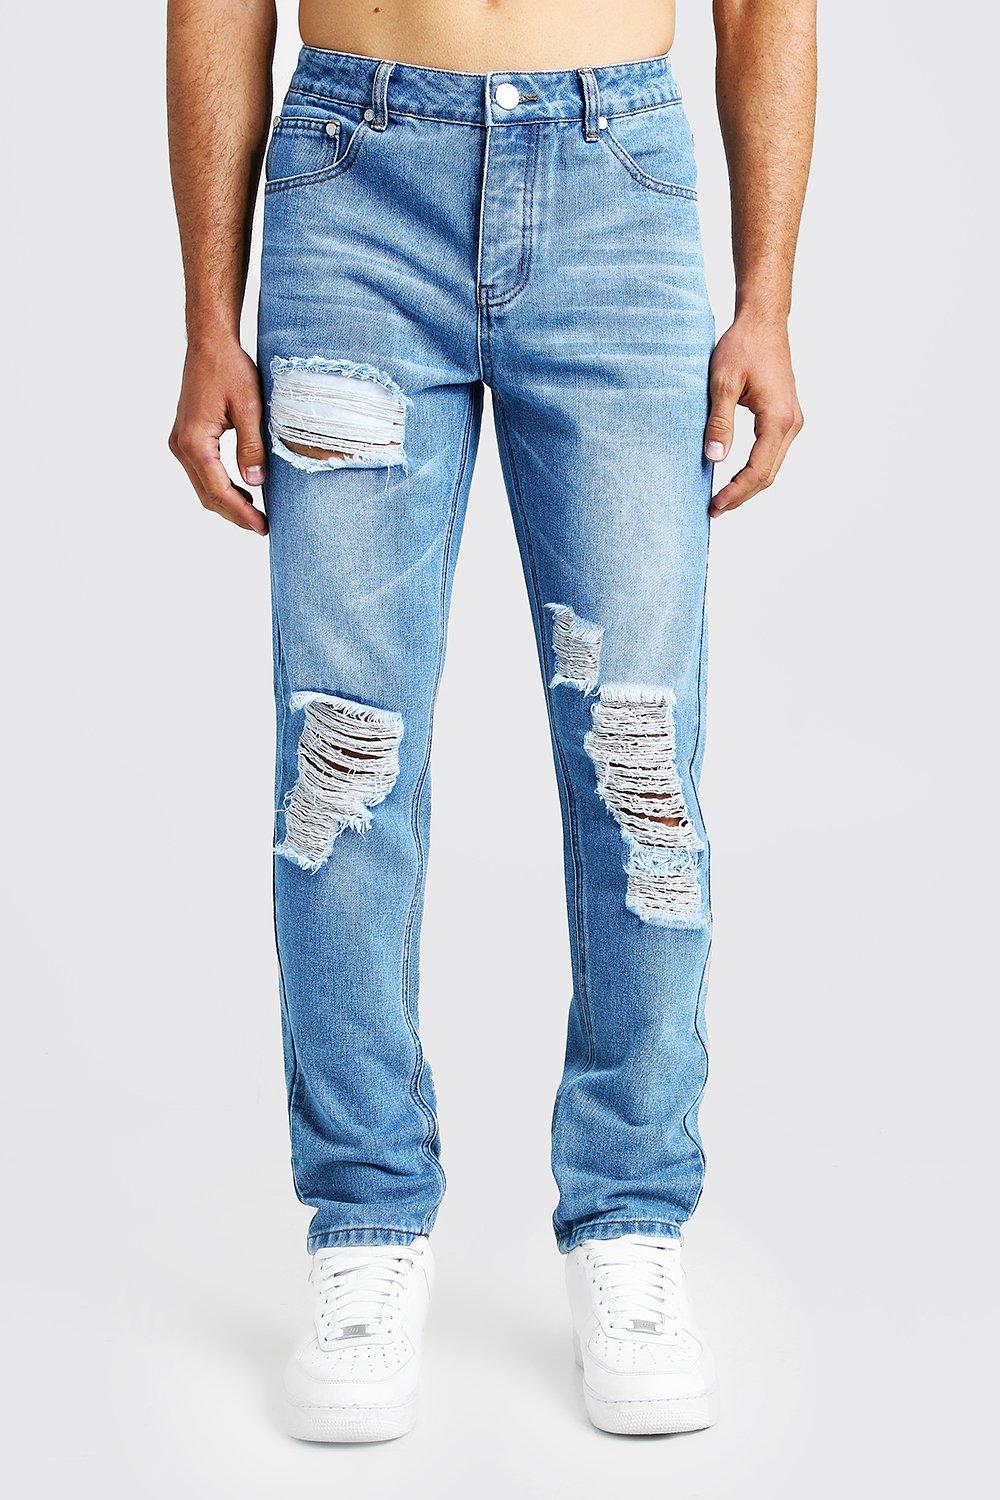 cheap ripped denim jeans